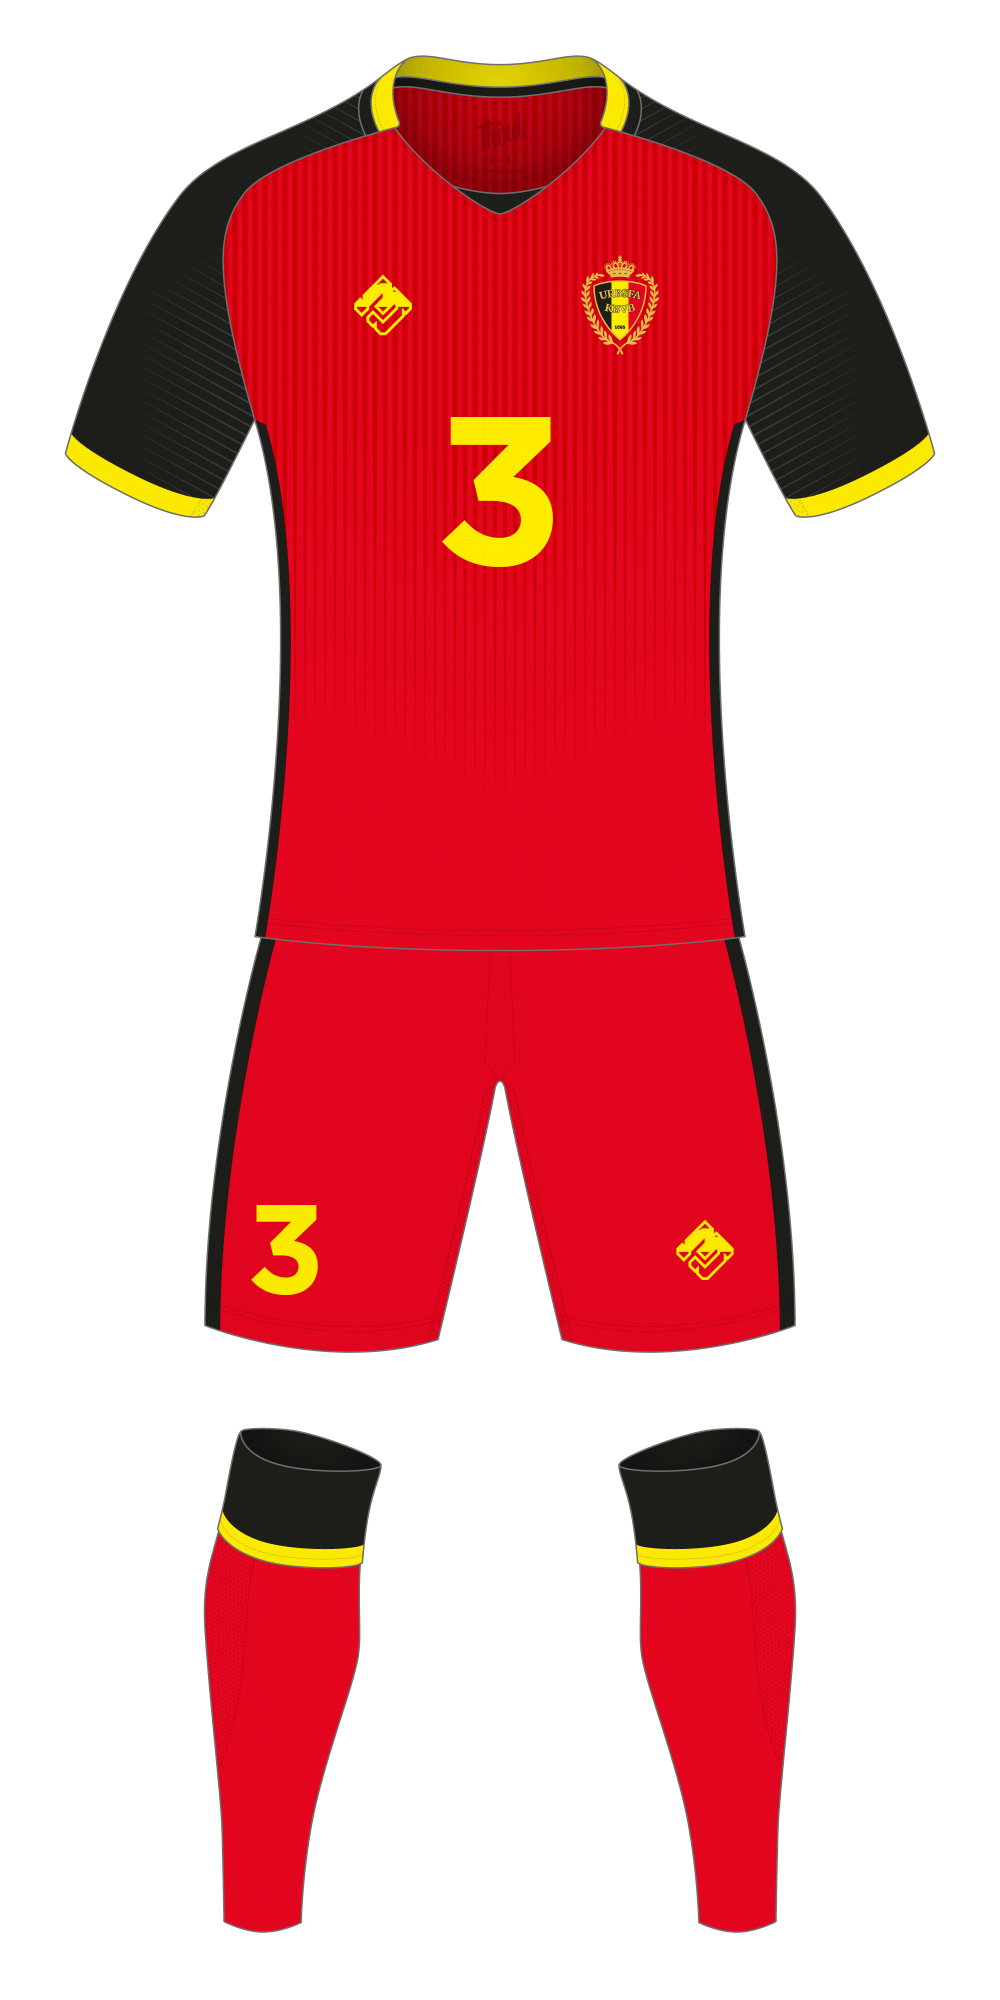 Belgium World Cup 2018 concept